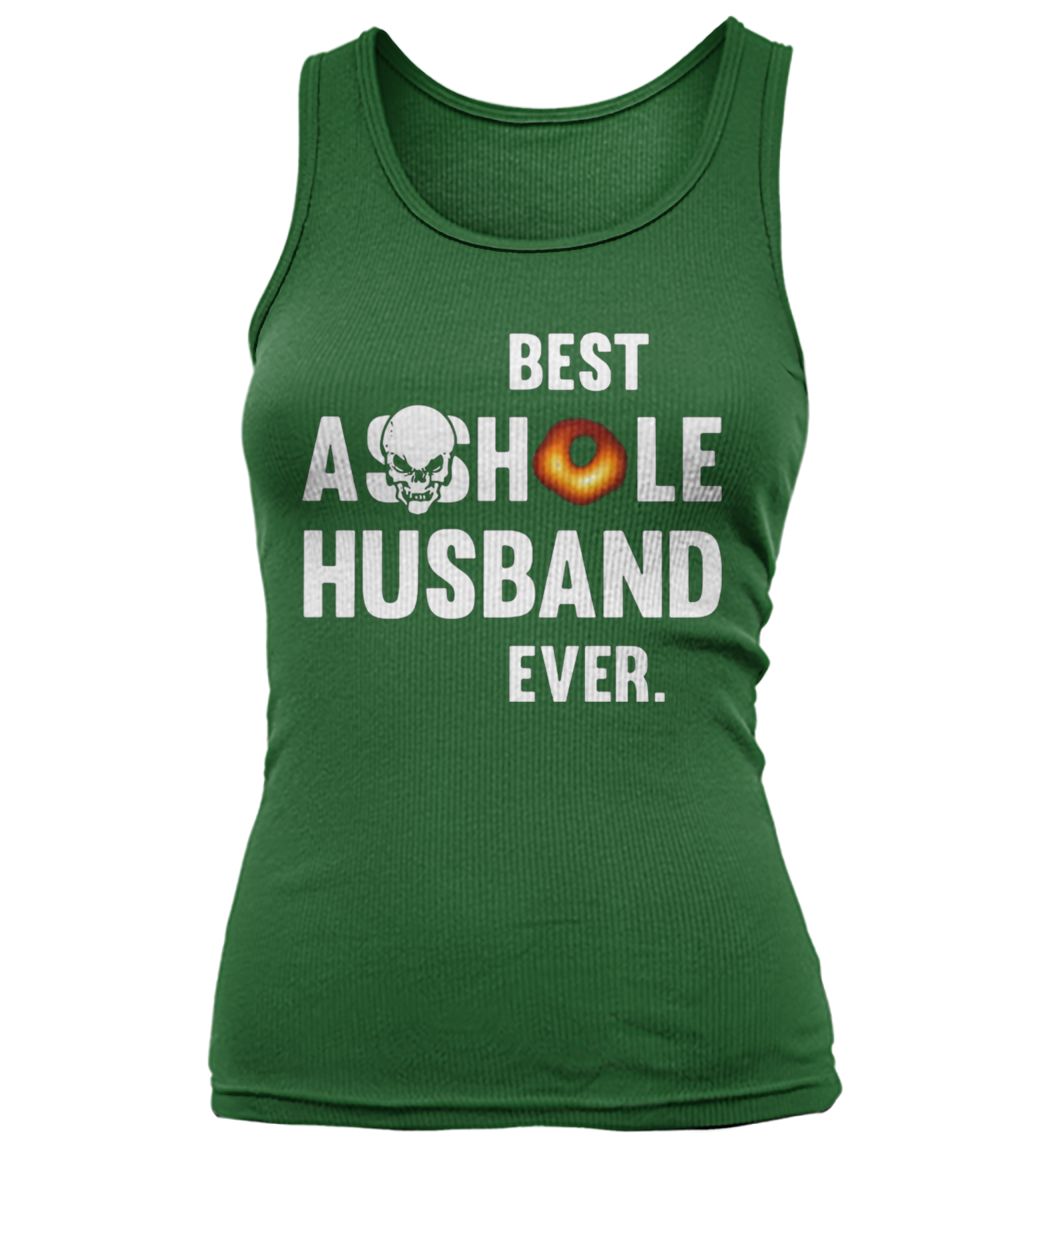 Black hole best asshole husband ever black hole 2019 women's tank top